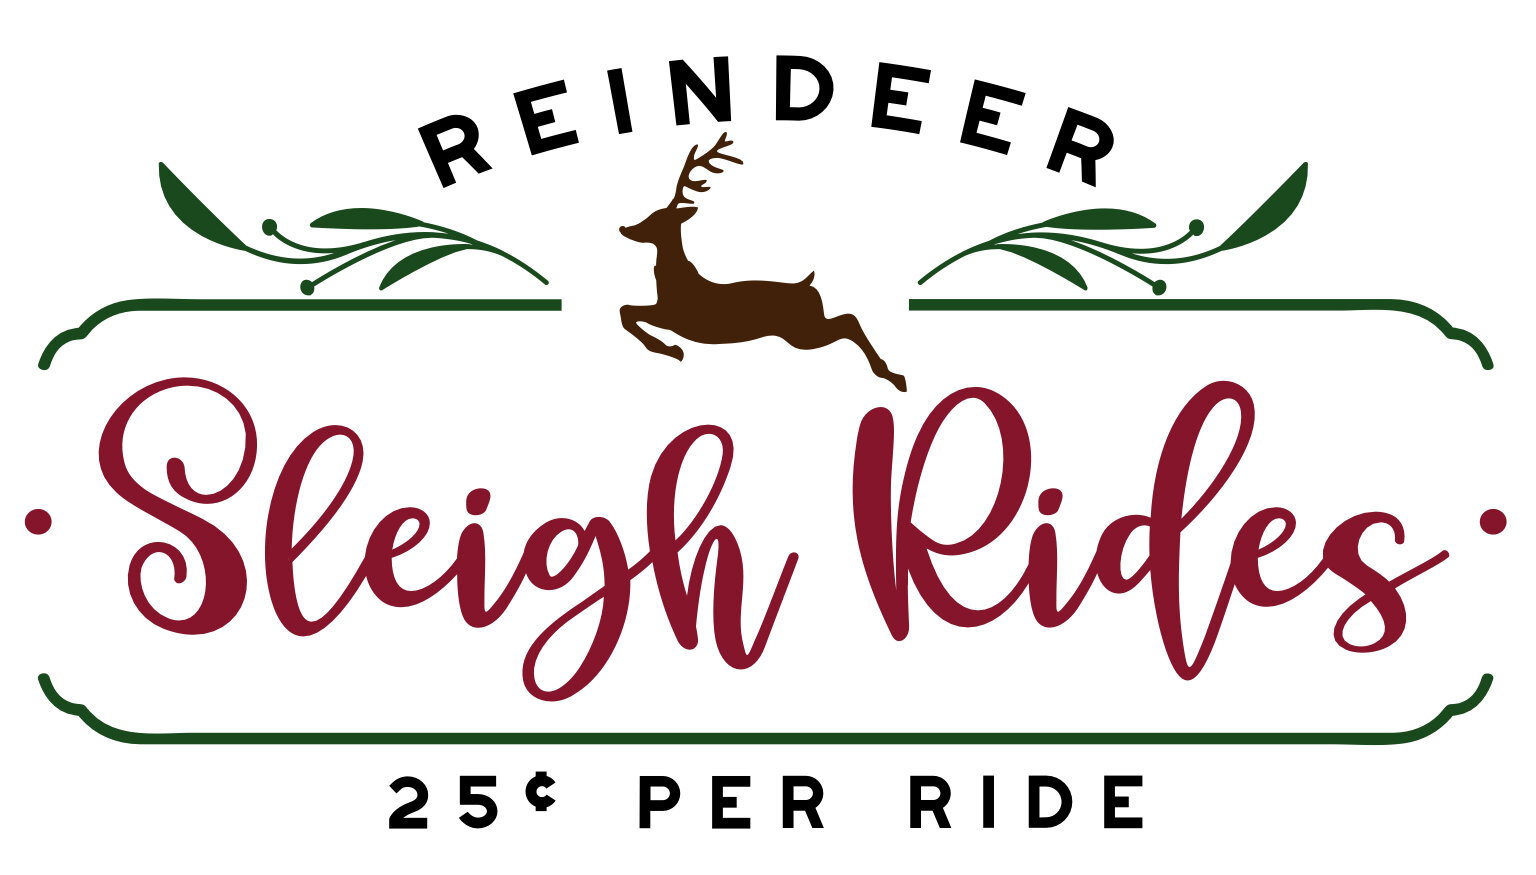 NEW #91 Reindeer Sleigh Rides